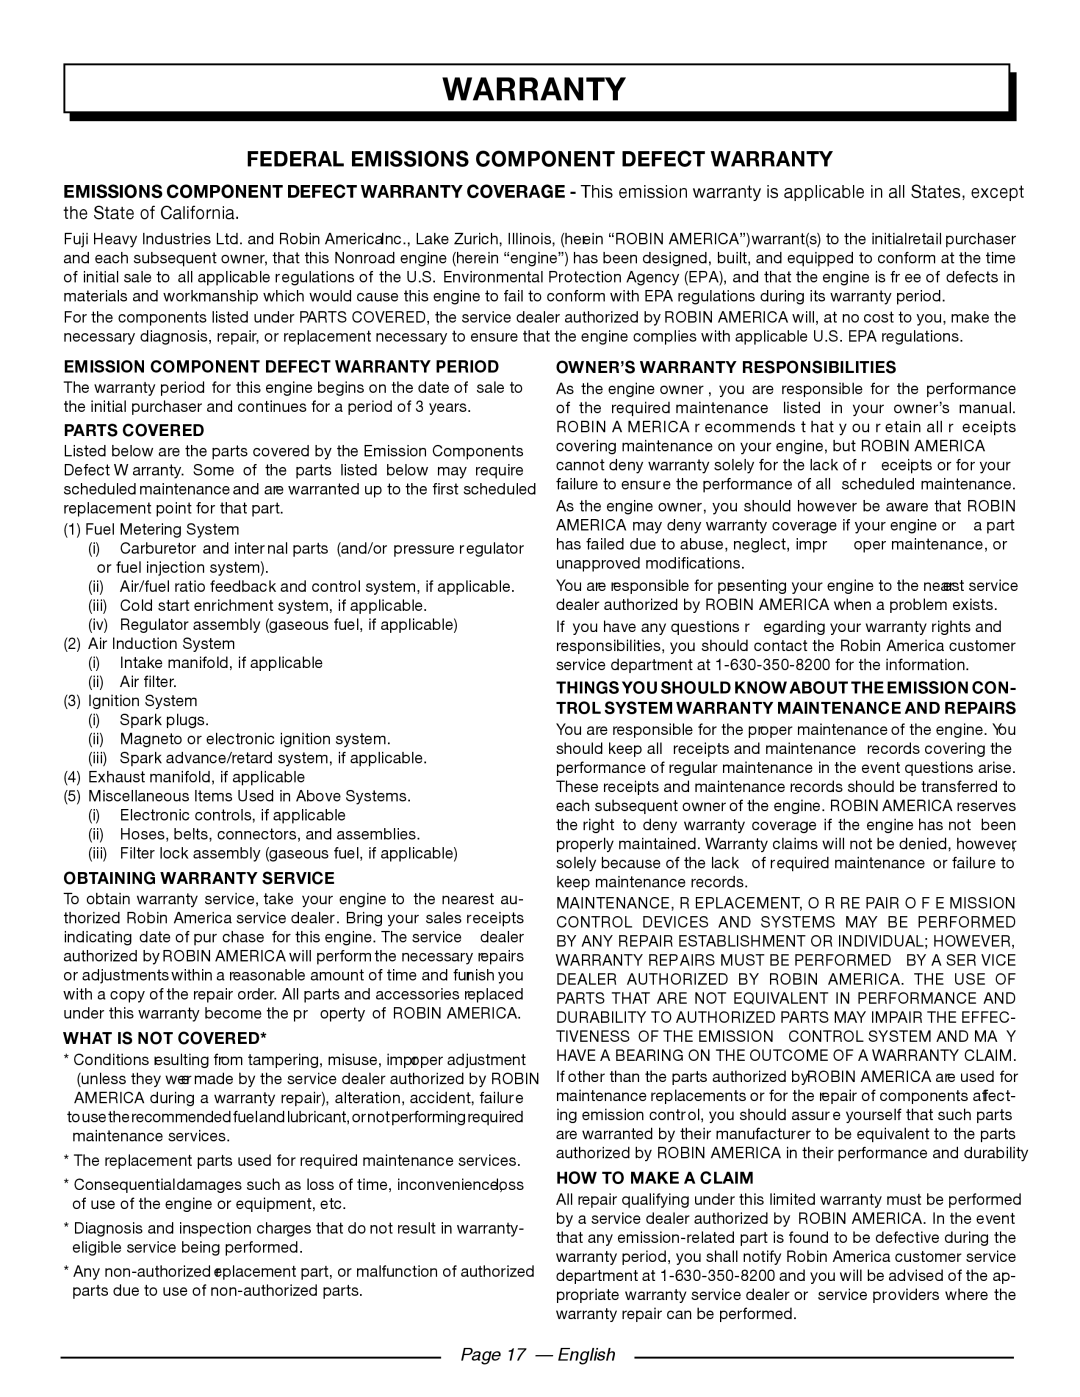 Homelite UT80709, UT80911 manuel dutilisation Federal Emissions Component Defect Warranty, Page 17 - English 